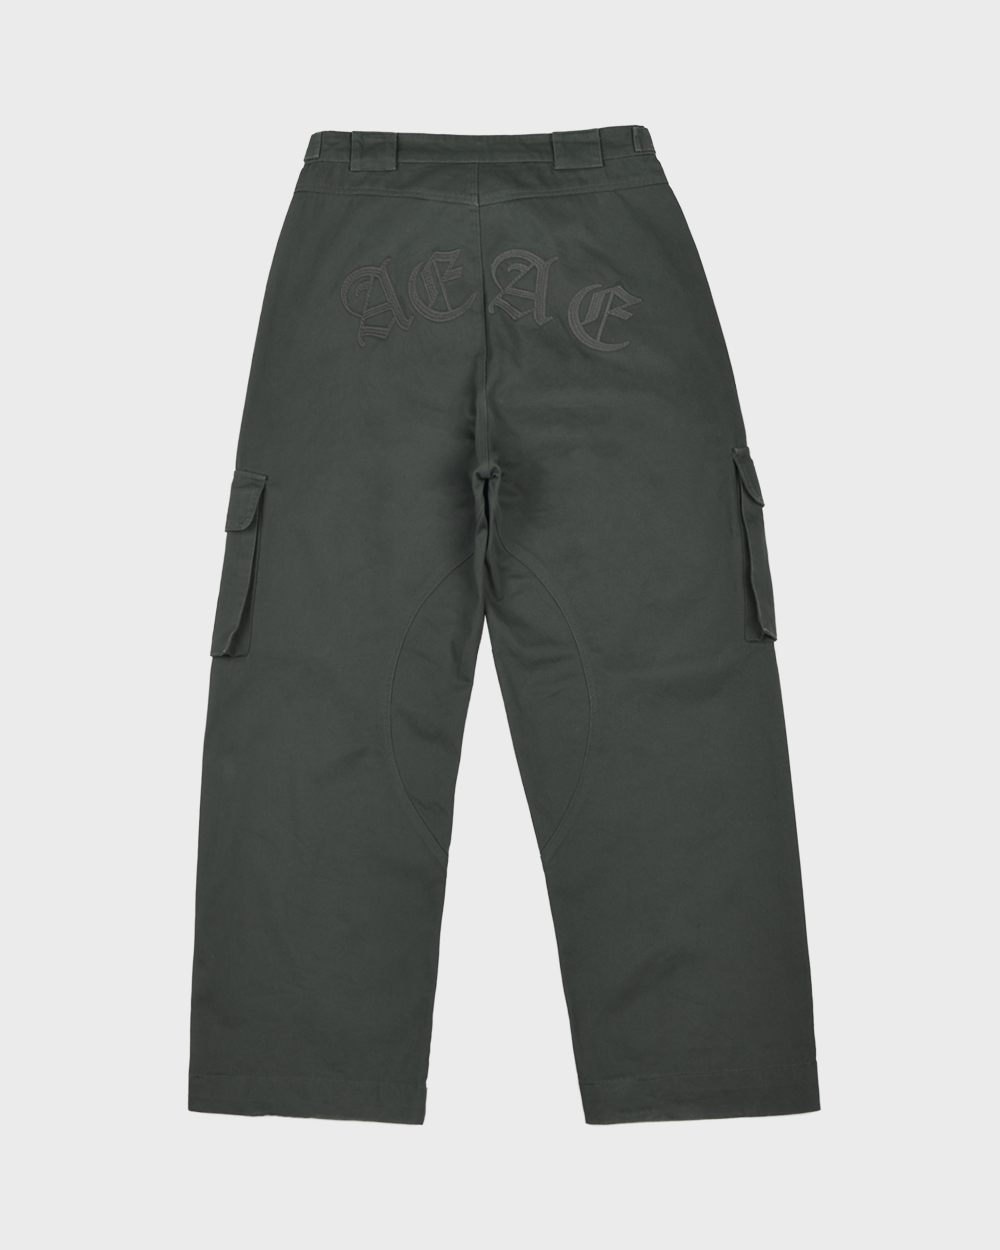 aeae 90’S Cargo Pants (Olive)